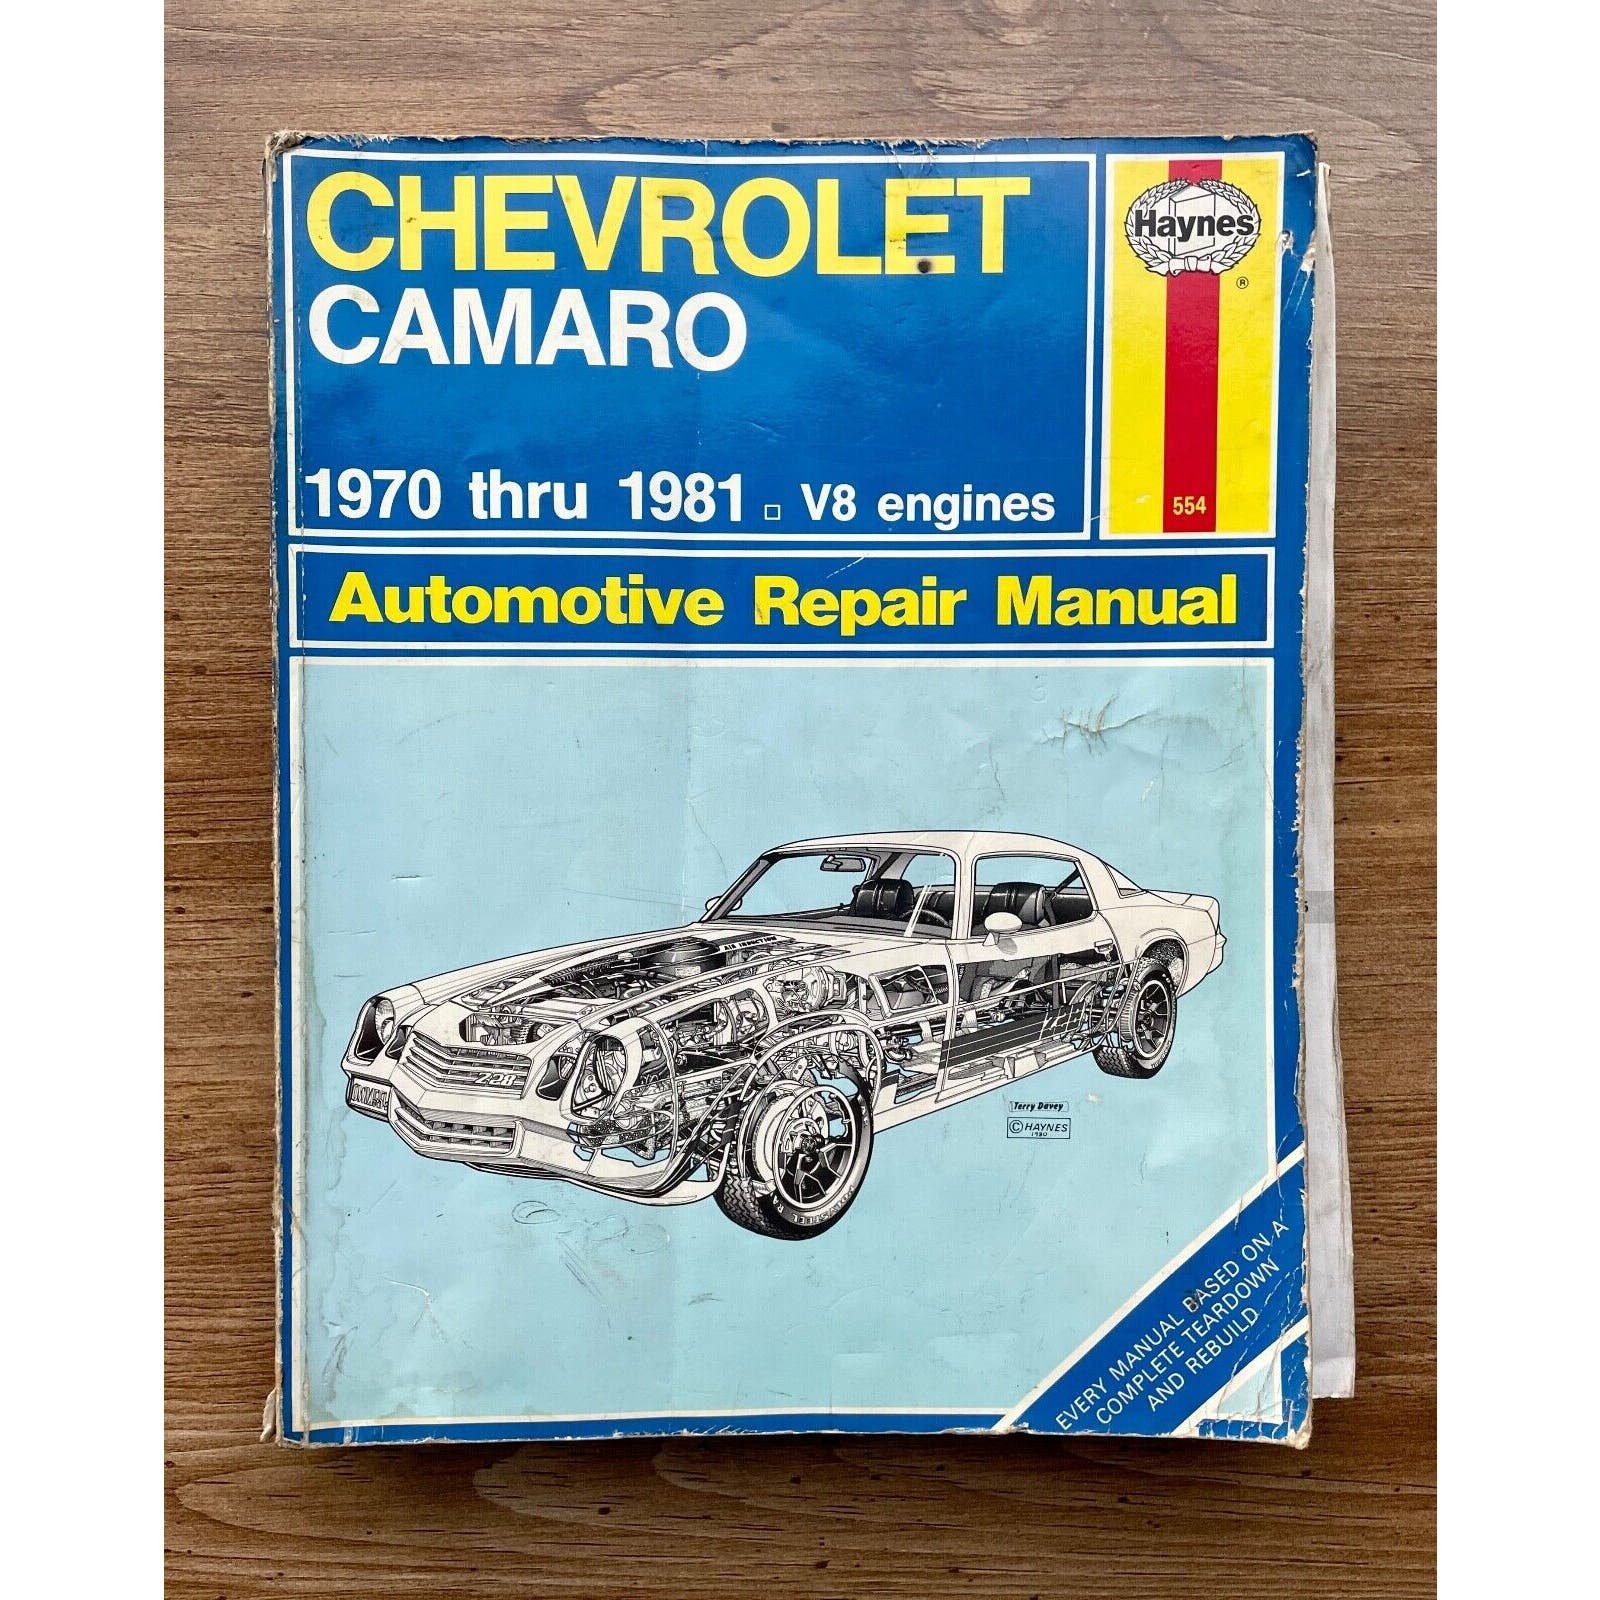 Haynes Chevrolet Camaro Repair Manual 1970-1981 V8 Engines #554 e29gTvw1X